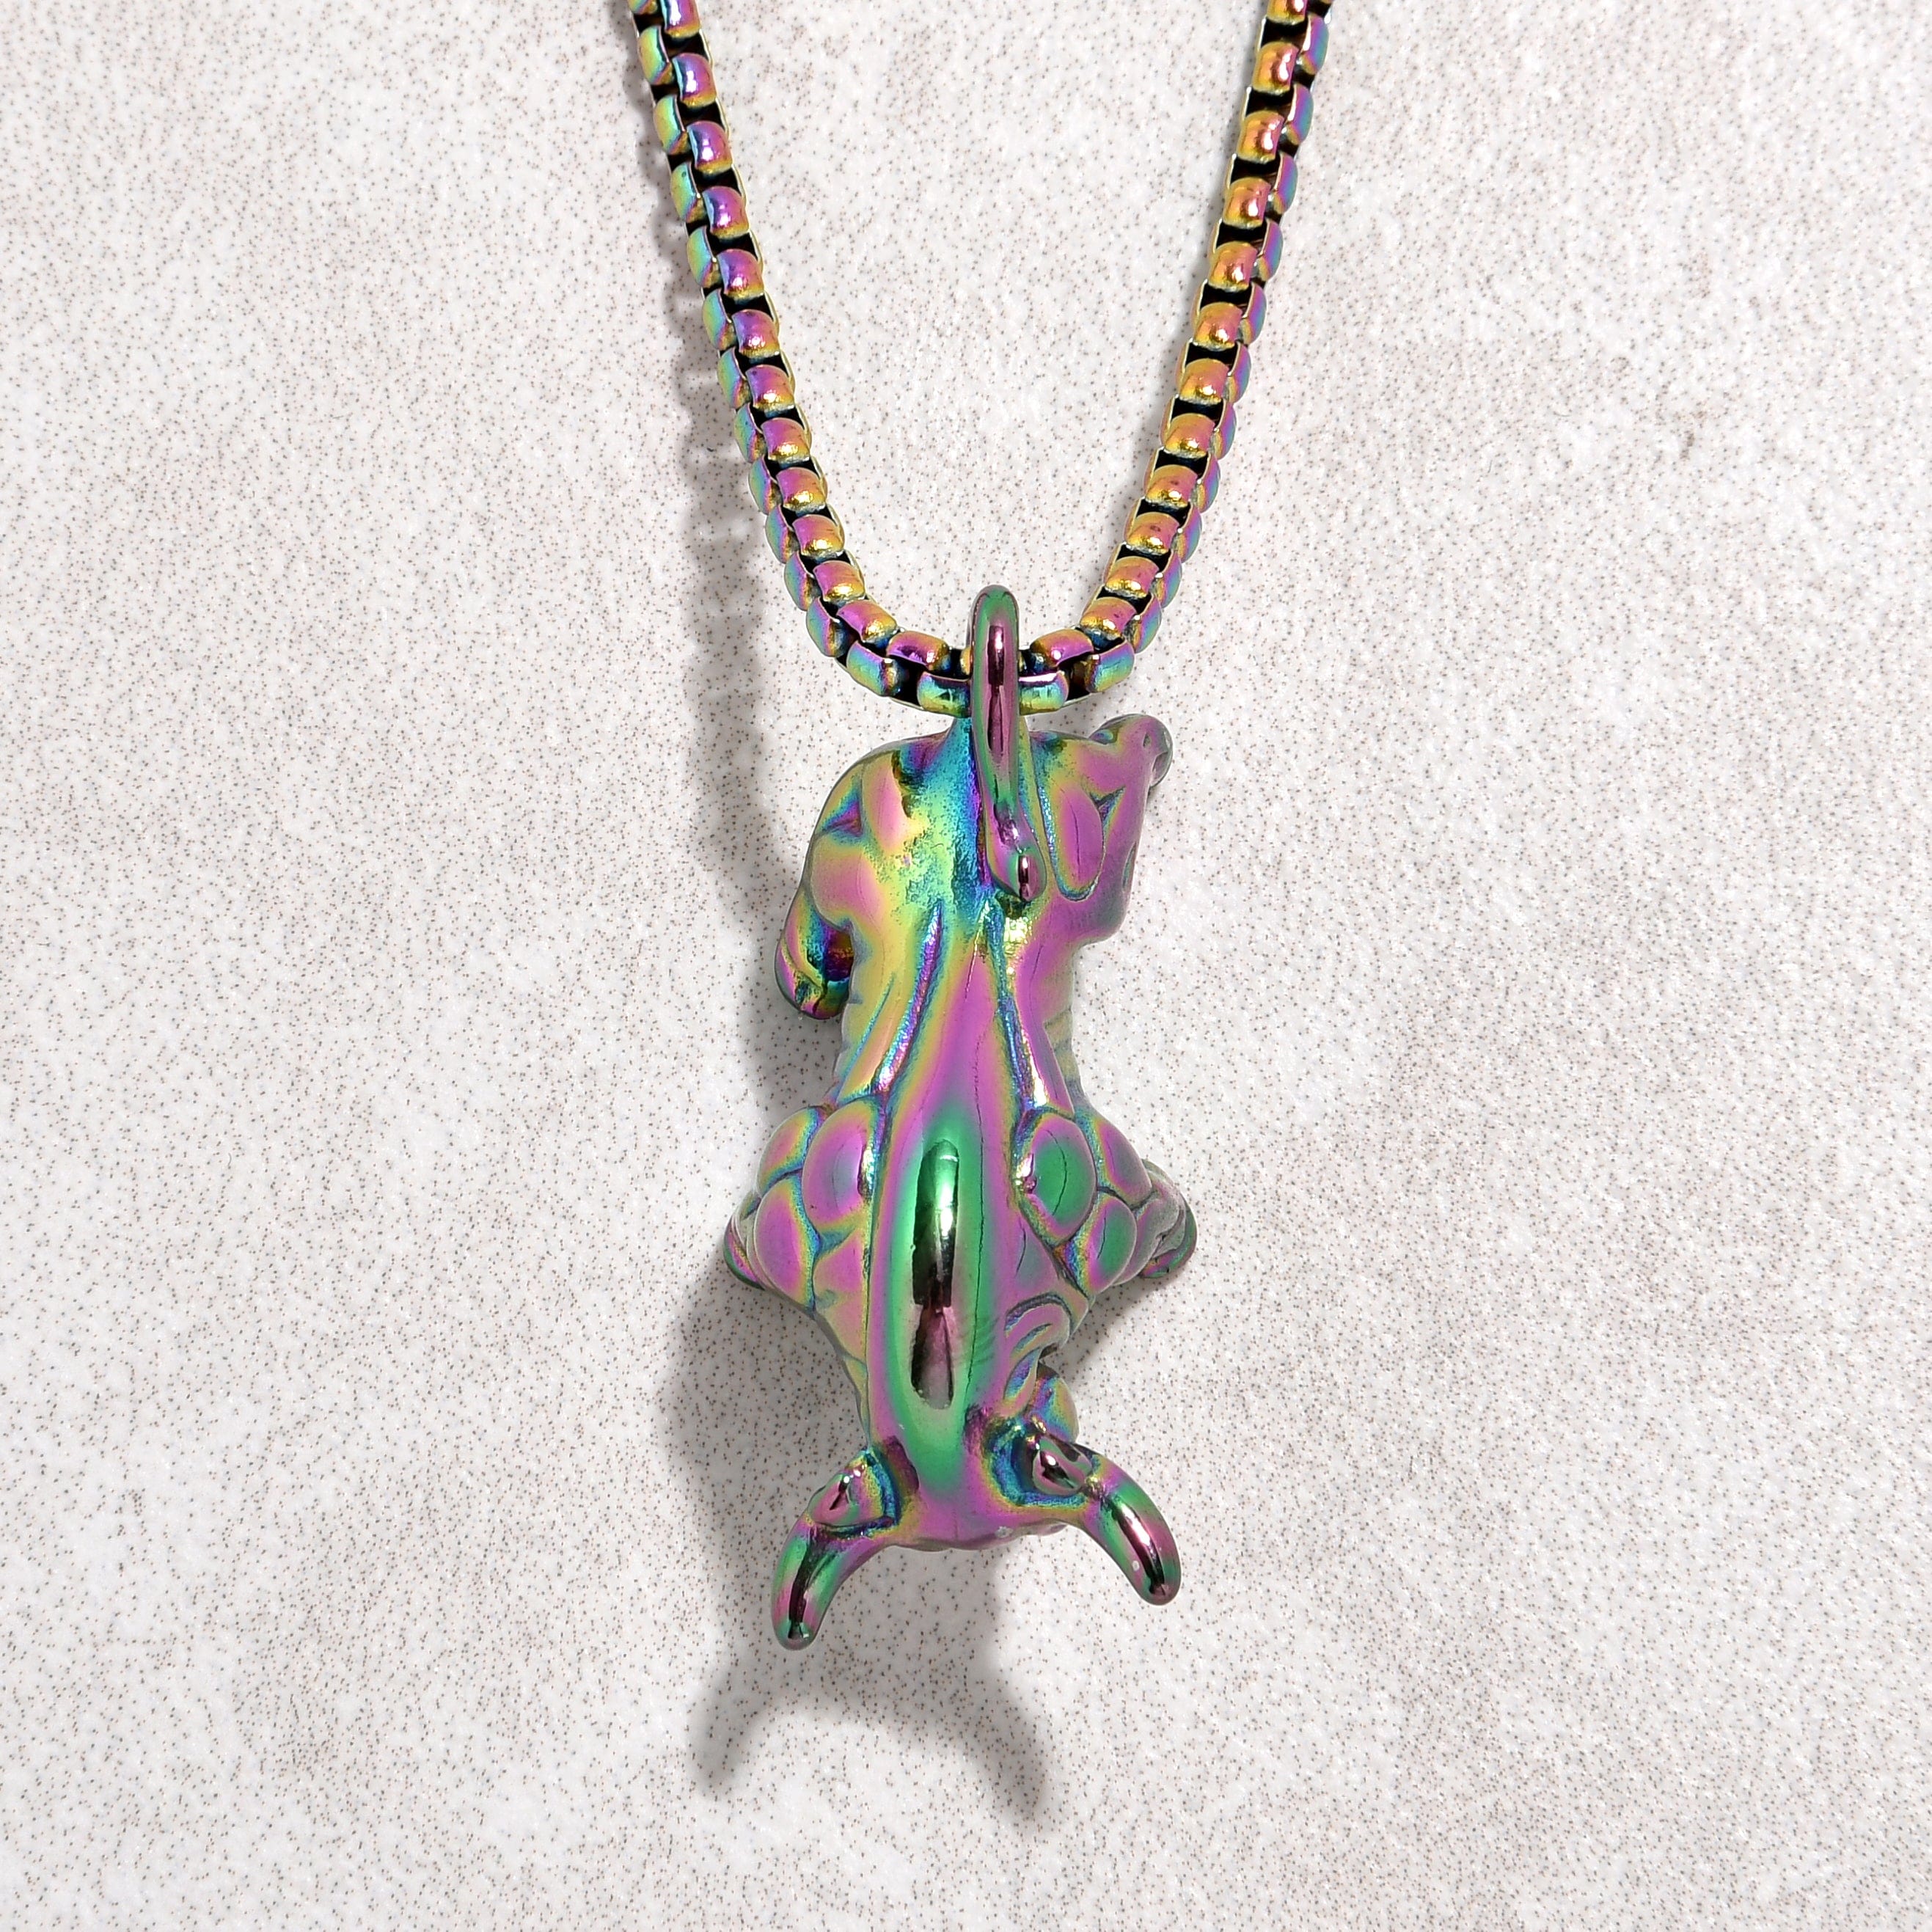 Kalifano Steel Hearts Jewelry Aurora Borealis Bull Steel Hearts Necklace SHN526-AB